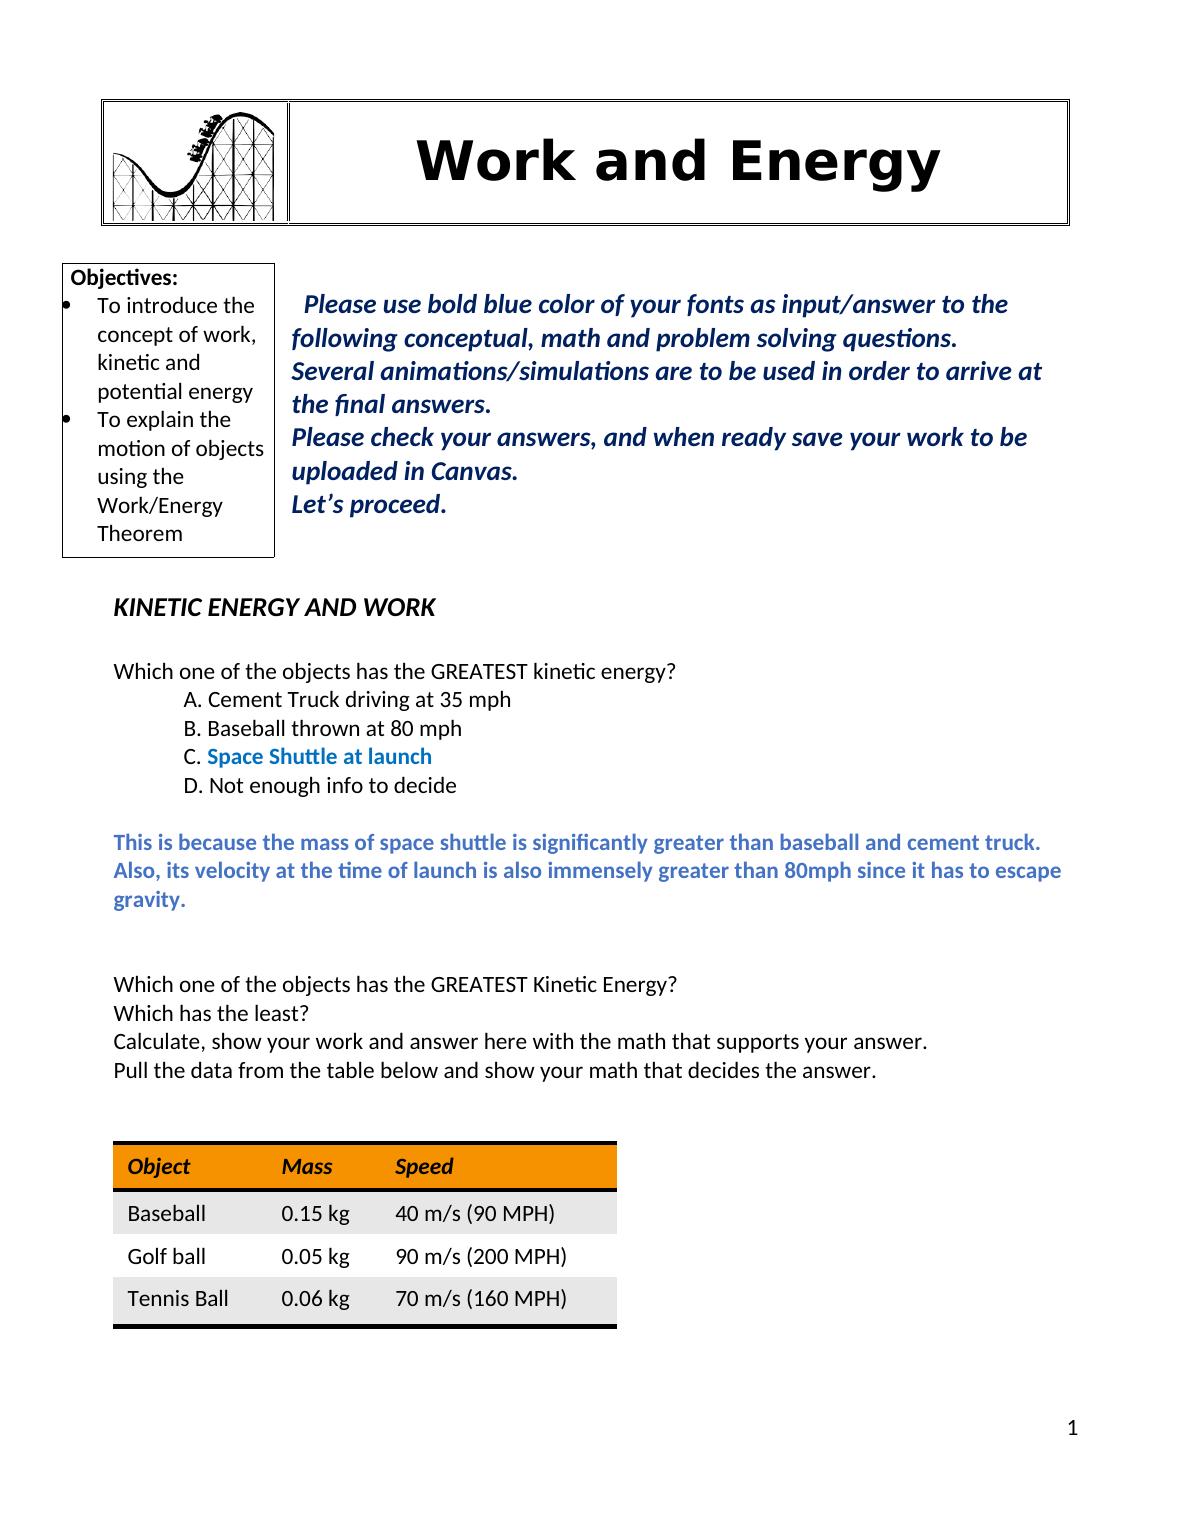 Kinetic Energy and Work Presentation 2022_1